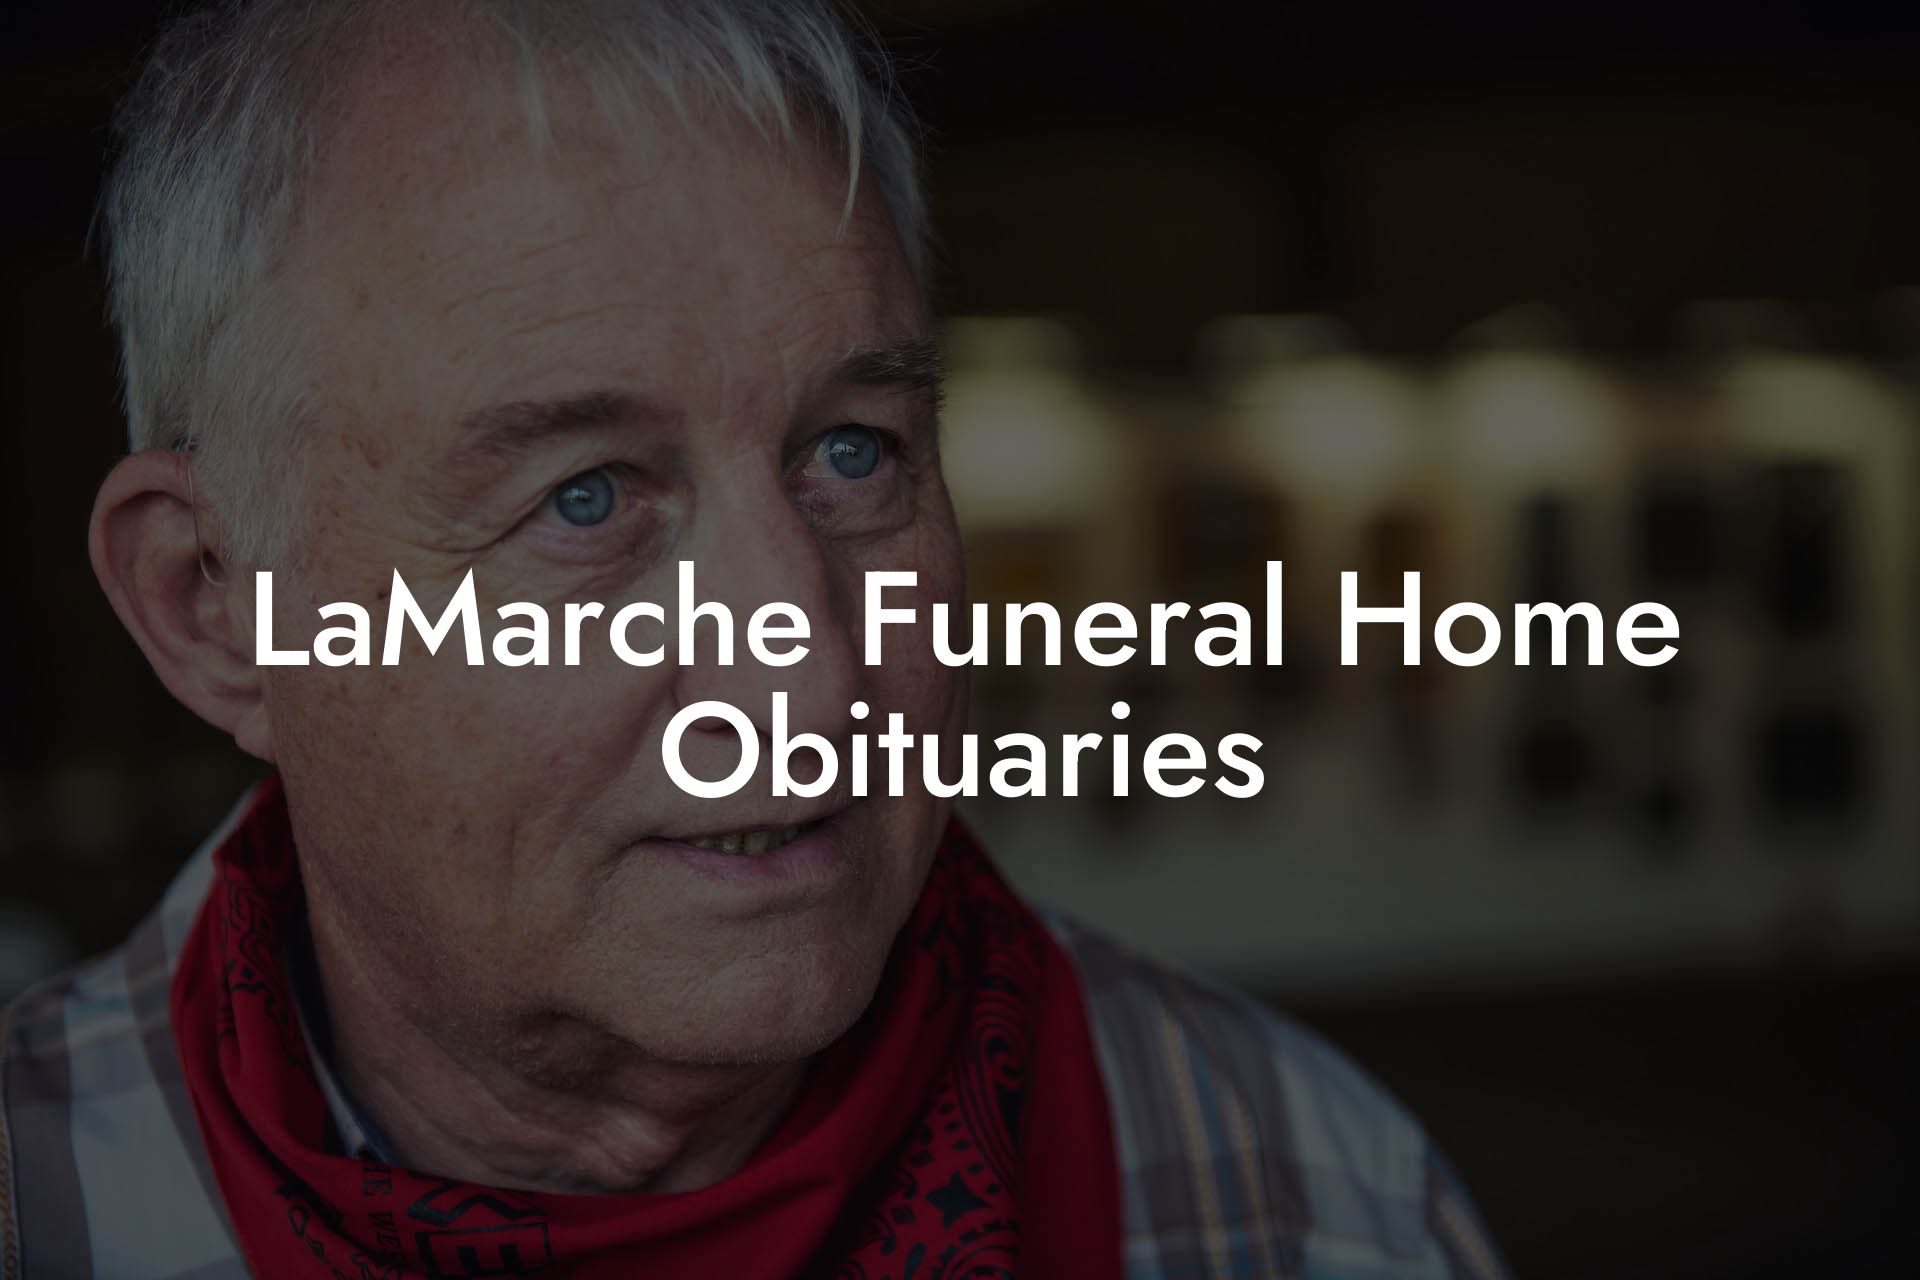 LaMarche Funeral Home Obituaries